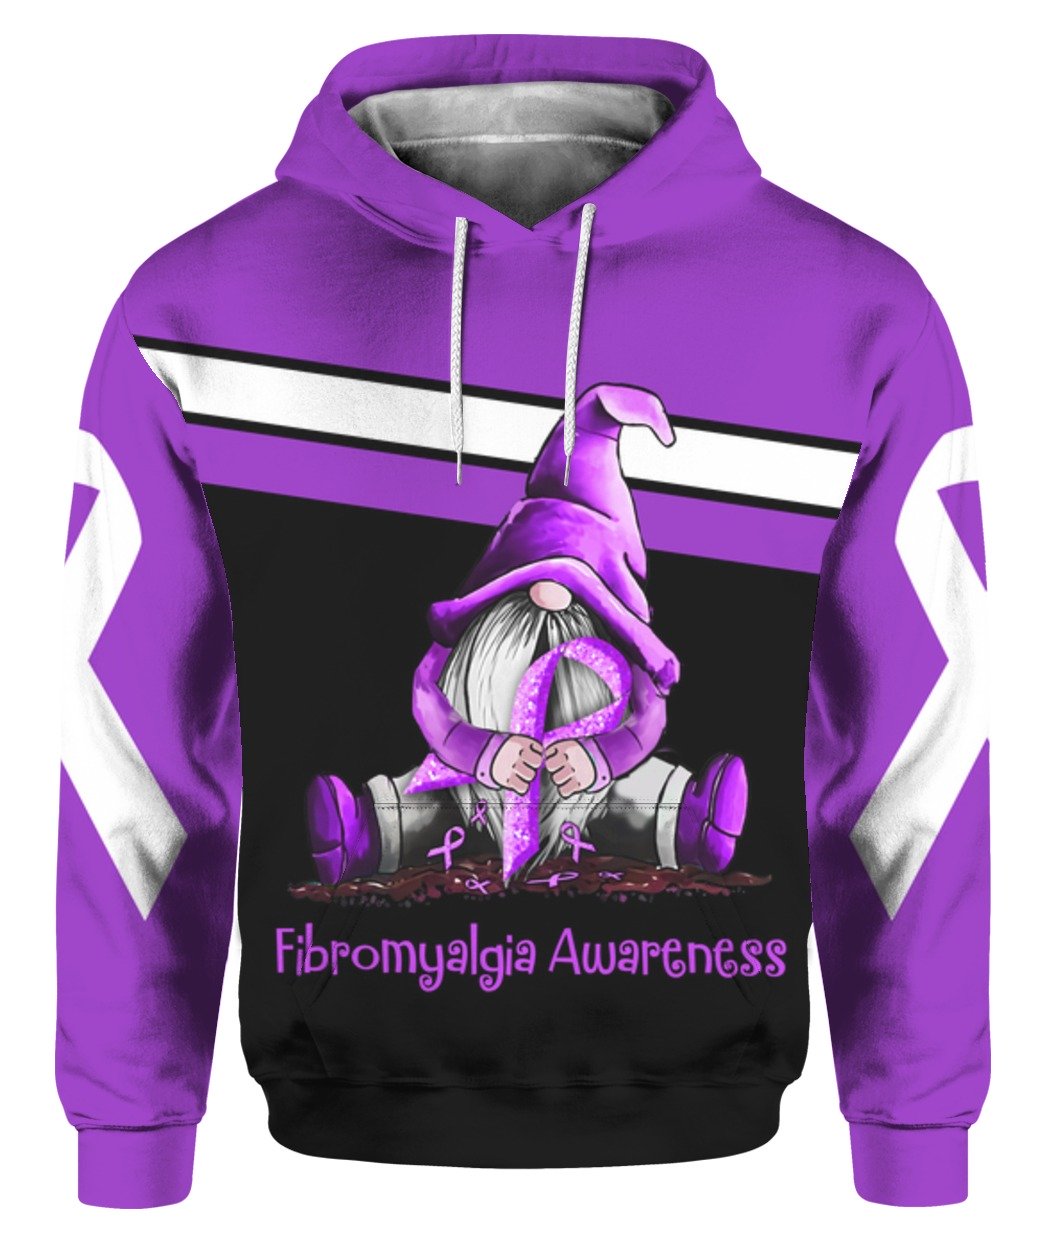 Gnome fibromyalgia awareness full printing hoodie